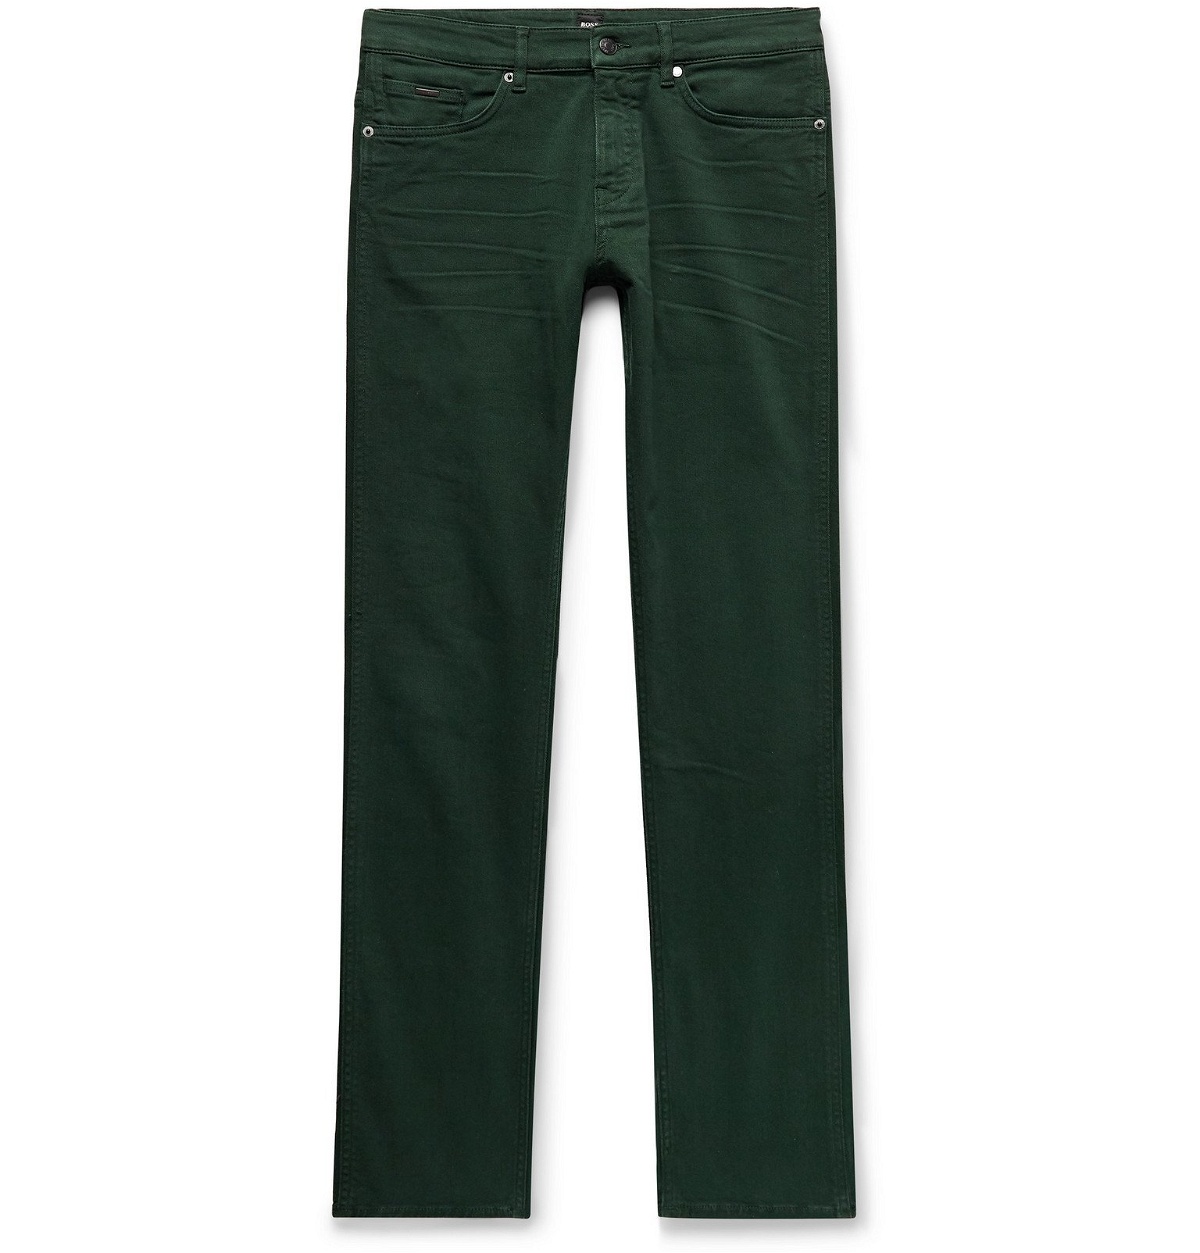 Plain Men Dark Blue Denim Jeans, Straight Fit at Rs 650/piece in Marigaon |  ID: 2852307932091